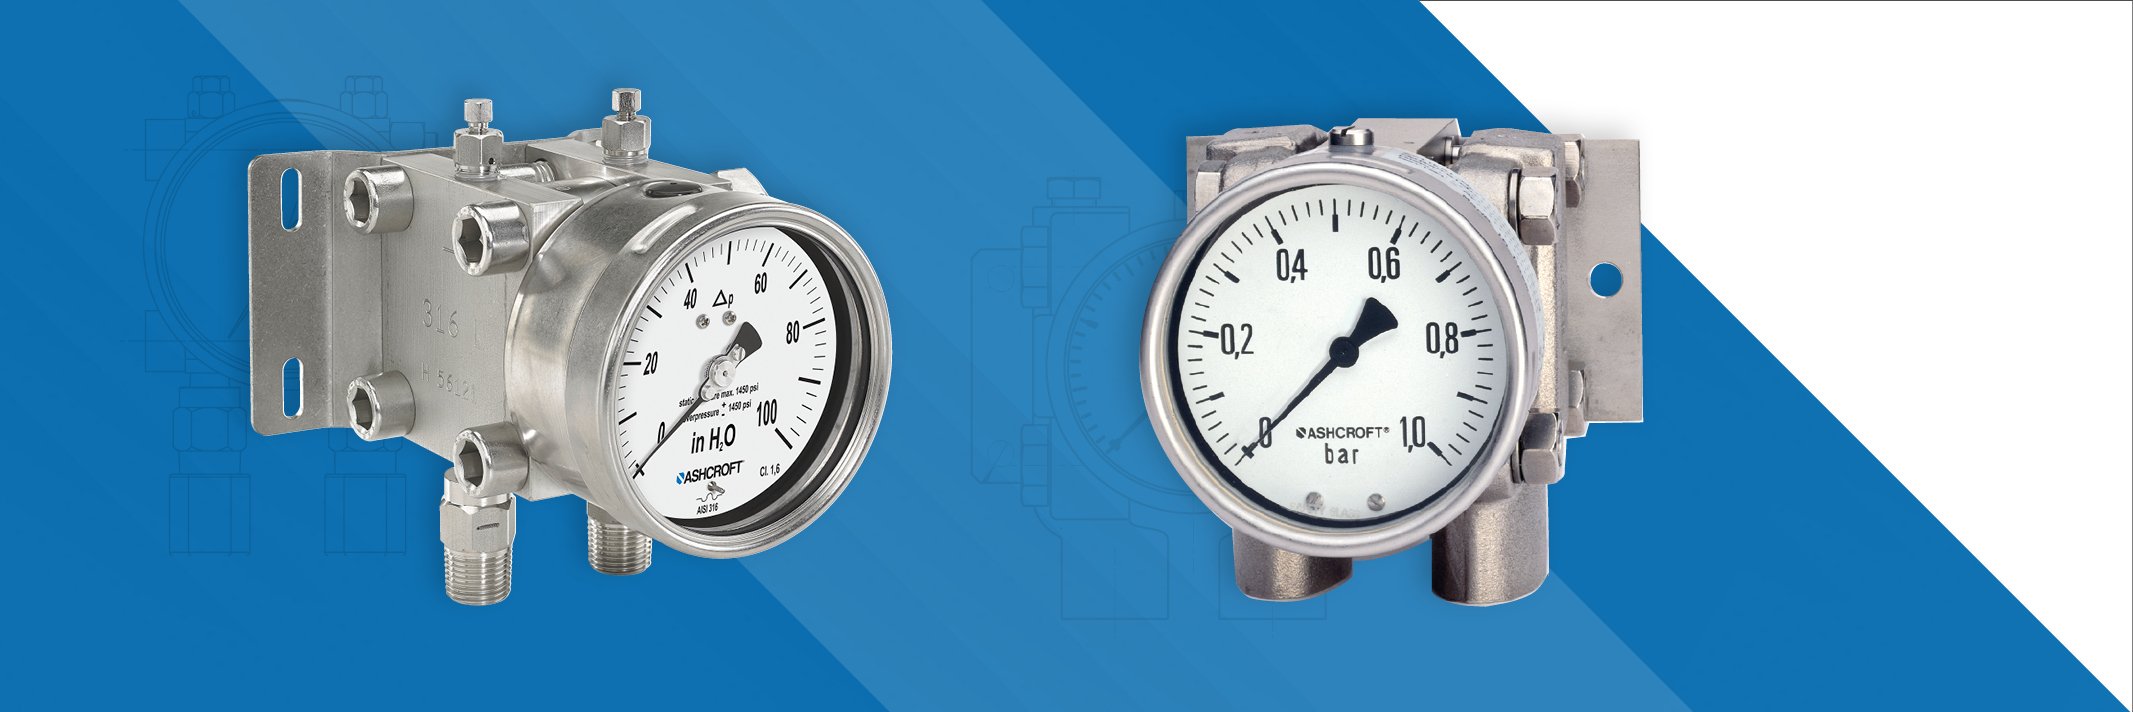 Product Comparison: 5503 vs. F5504 Differential Pressure Gauges